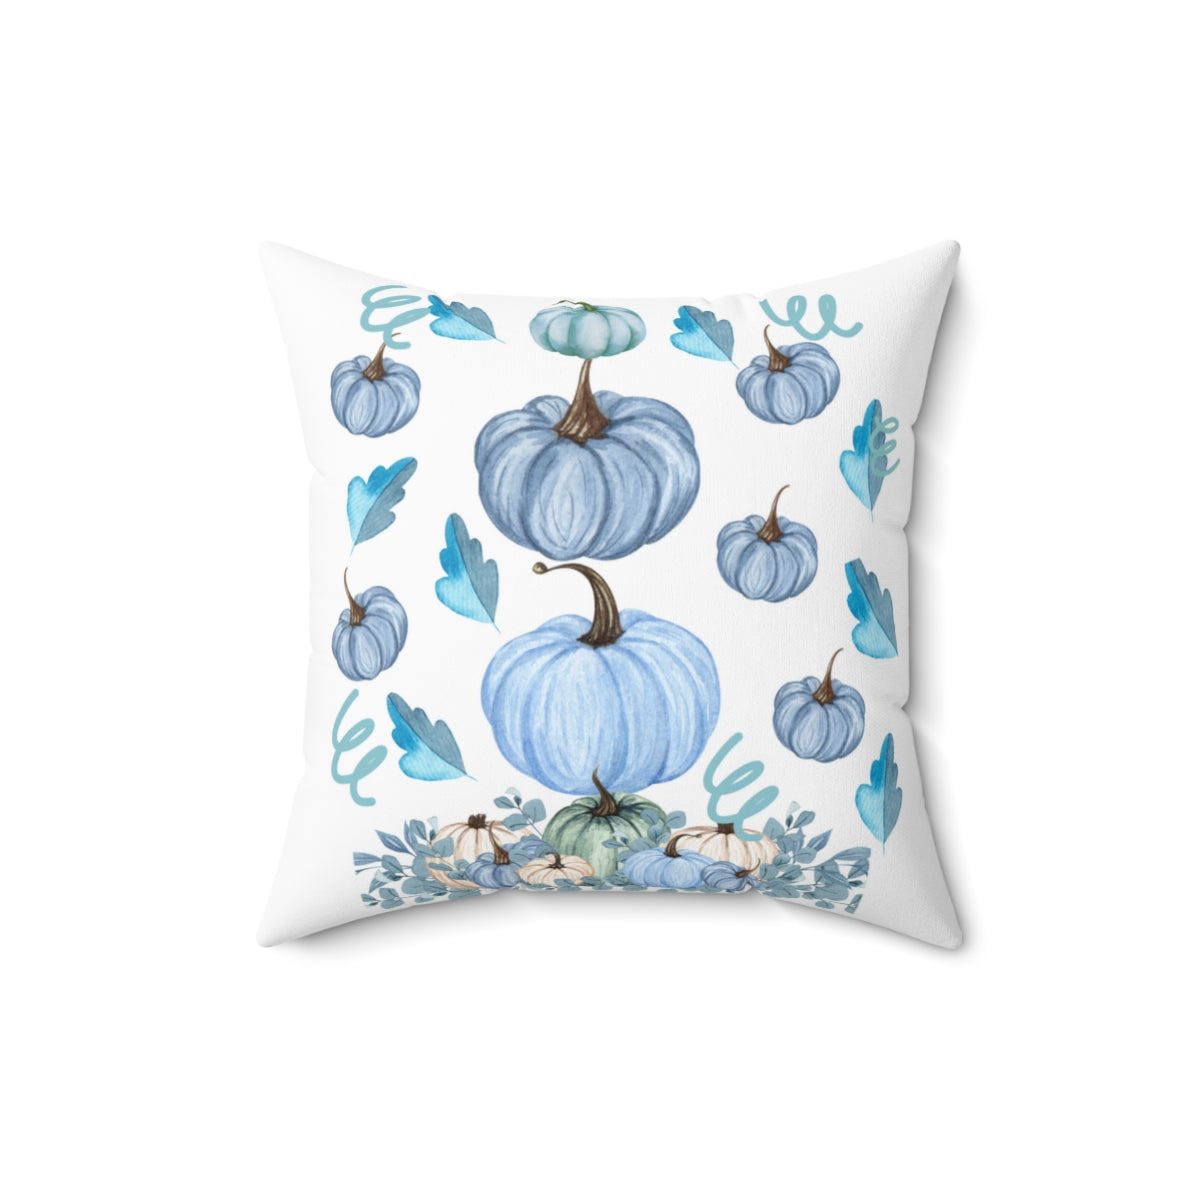 Fall Throw Pillow Covers Blue Pumpkin Fall Pillow Decorative Throw